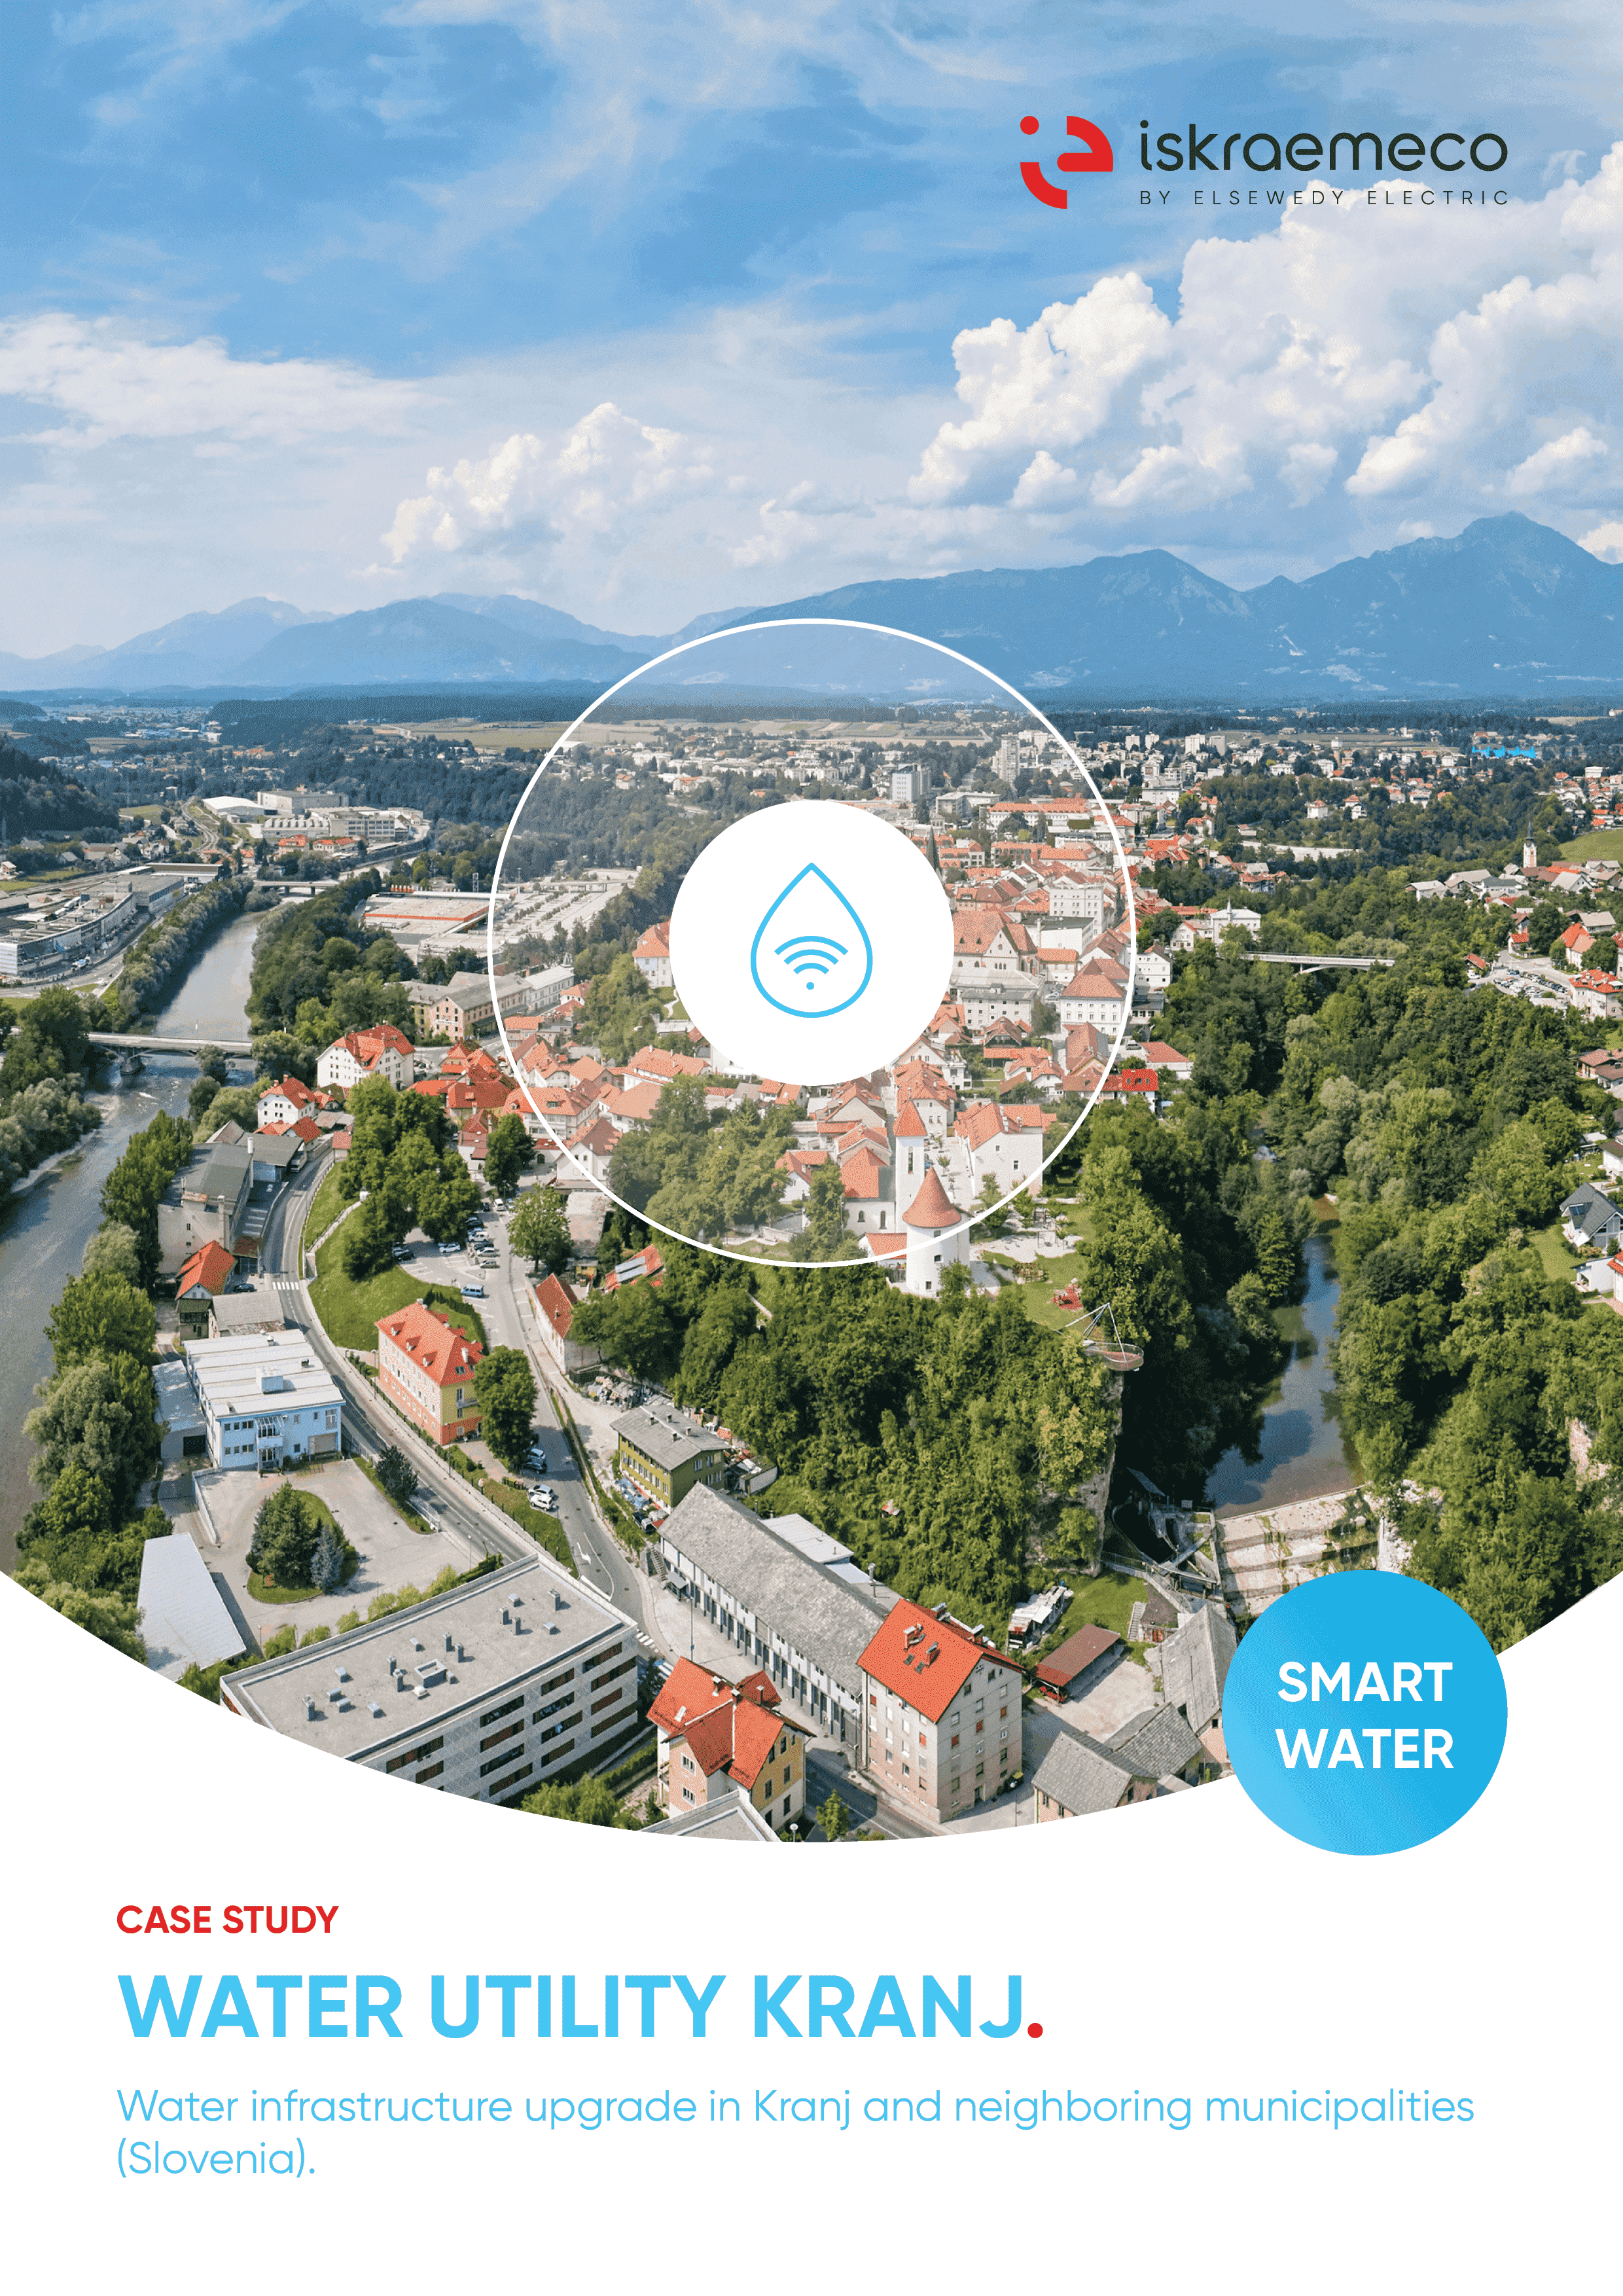 Water Infrastructure Upgrade in Kranj, Slovenia